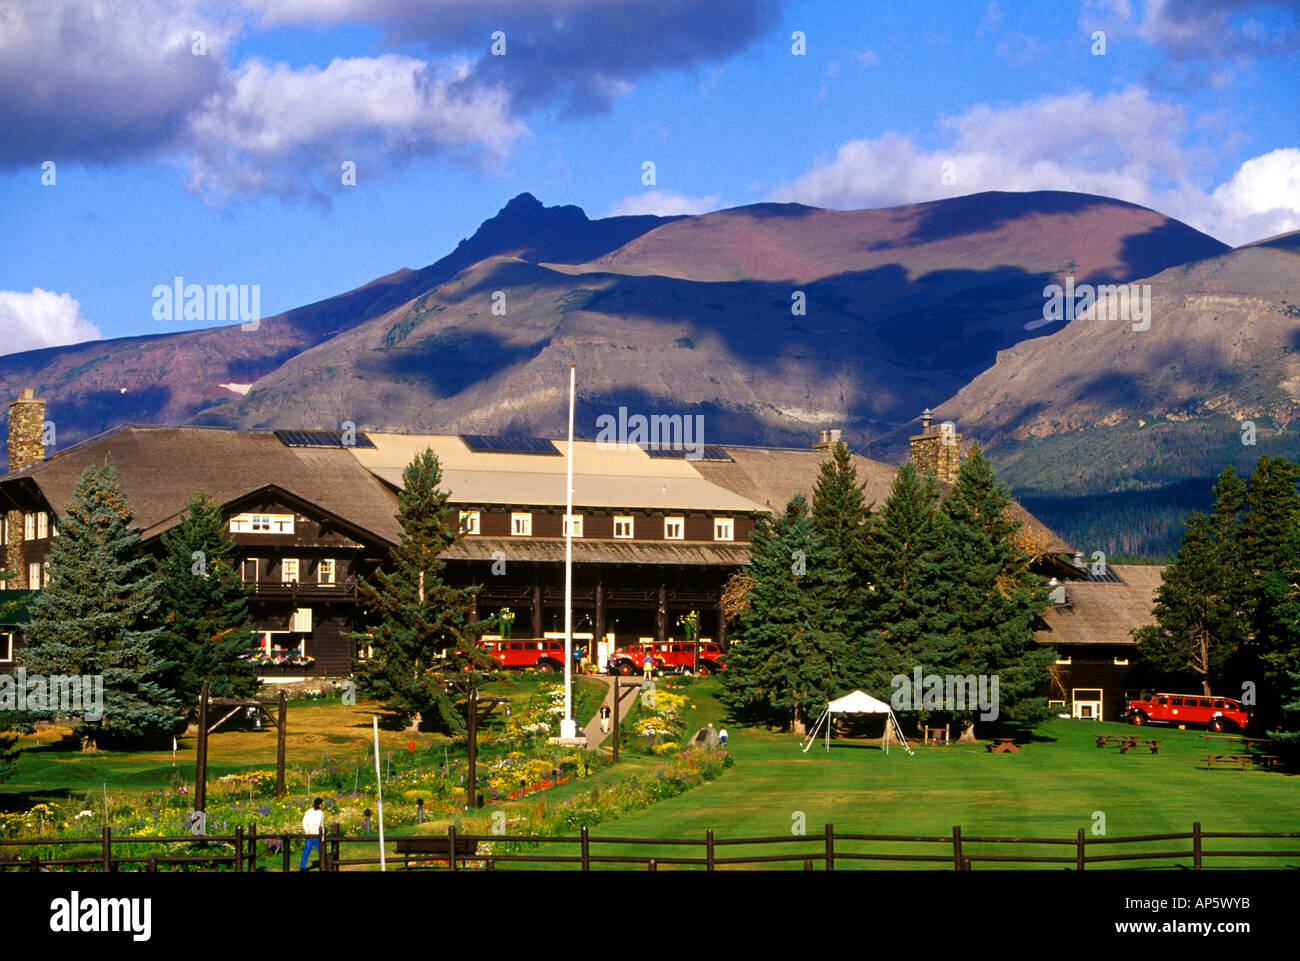 Glacier Park lodge in East Glacier Montana Stock Photo - Alamy